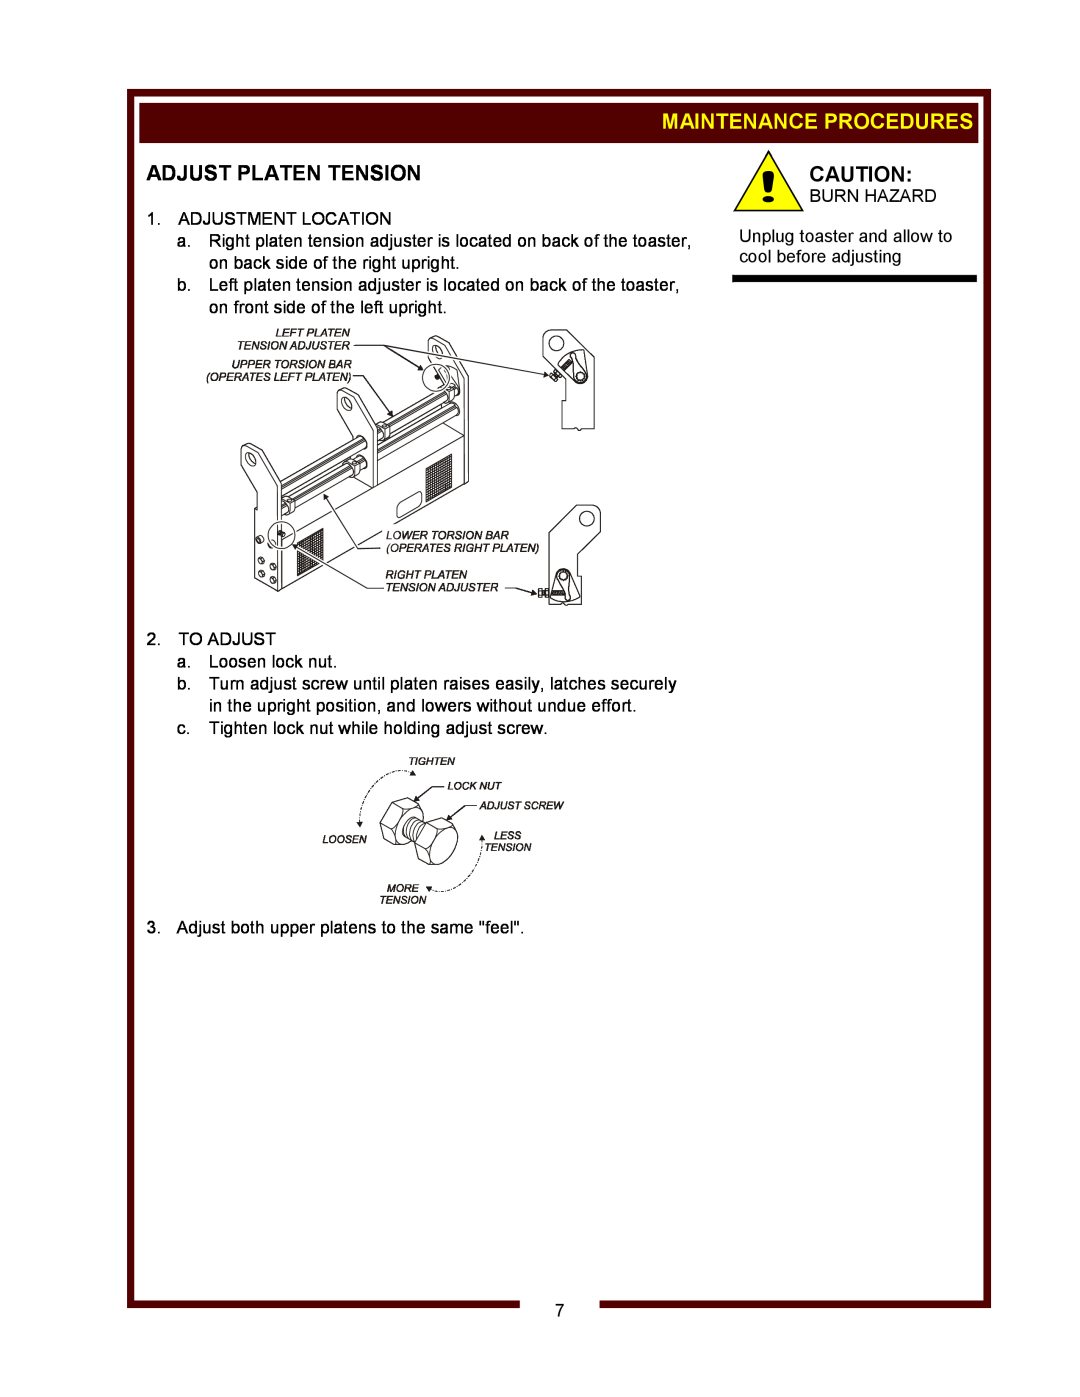 Wells FT-18 operation manual Maintenance Procedures, Adjust Platen Tension 